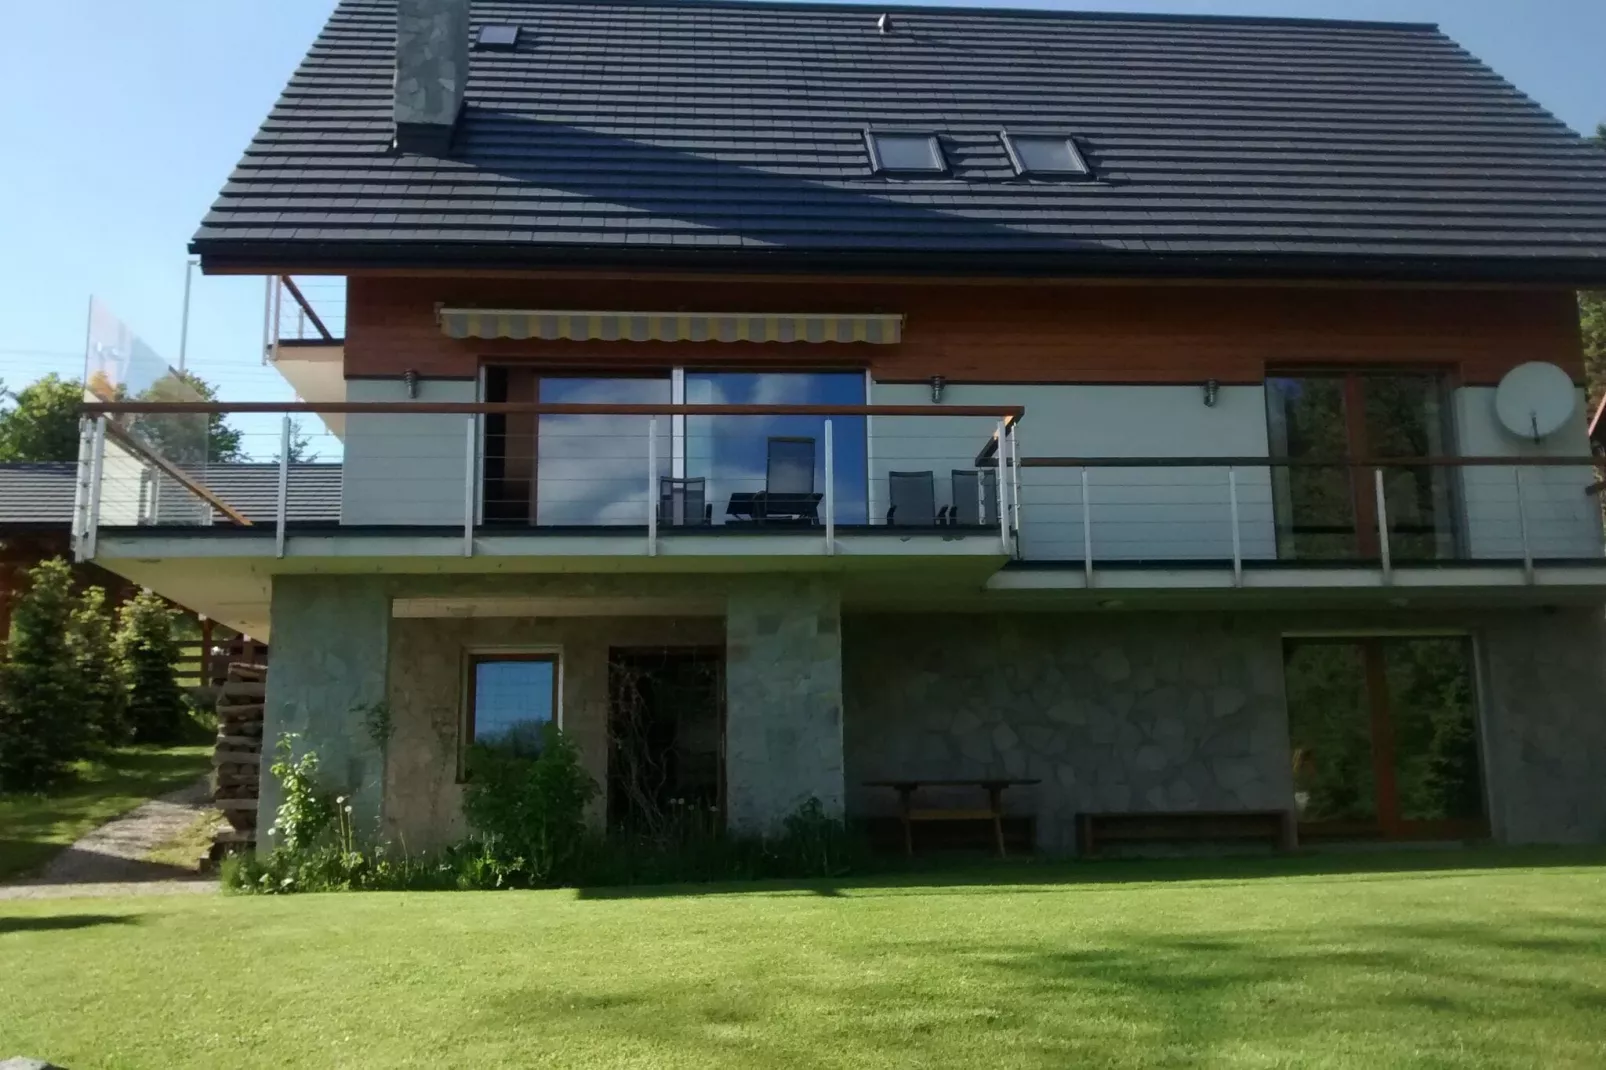 Villa with Mountain View-Niet-getagd